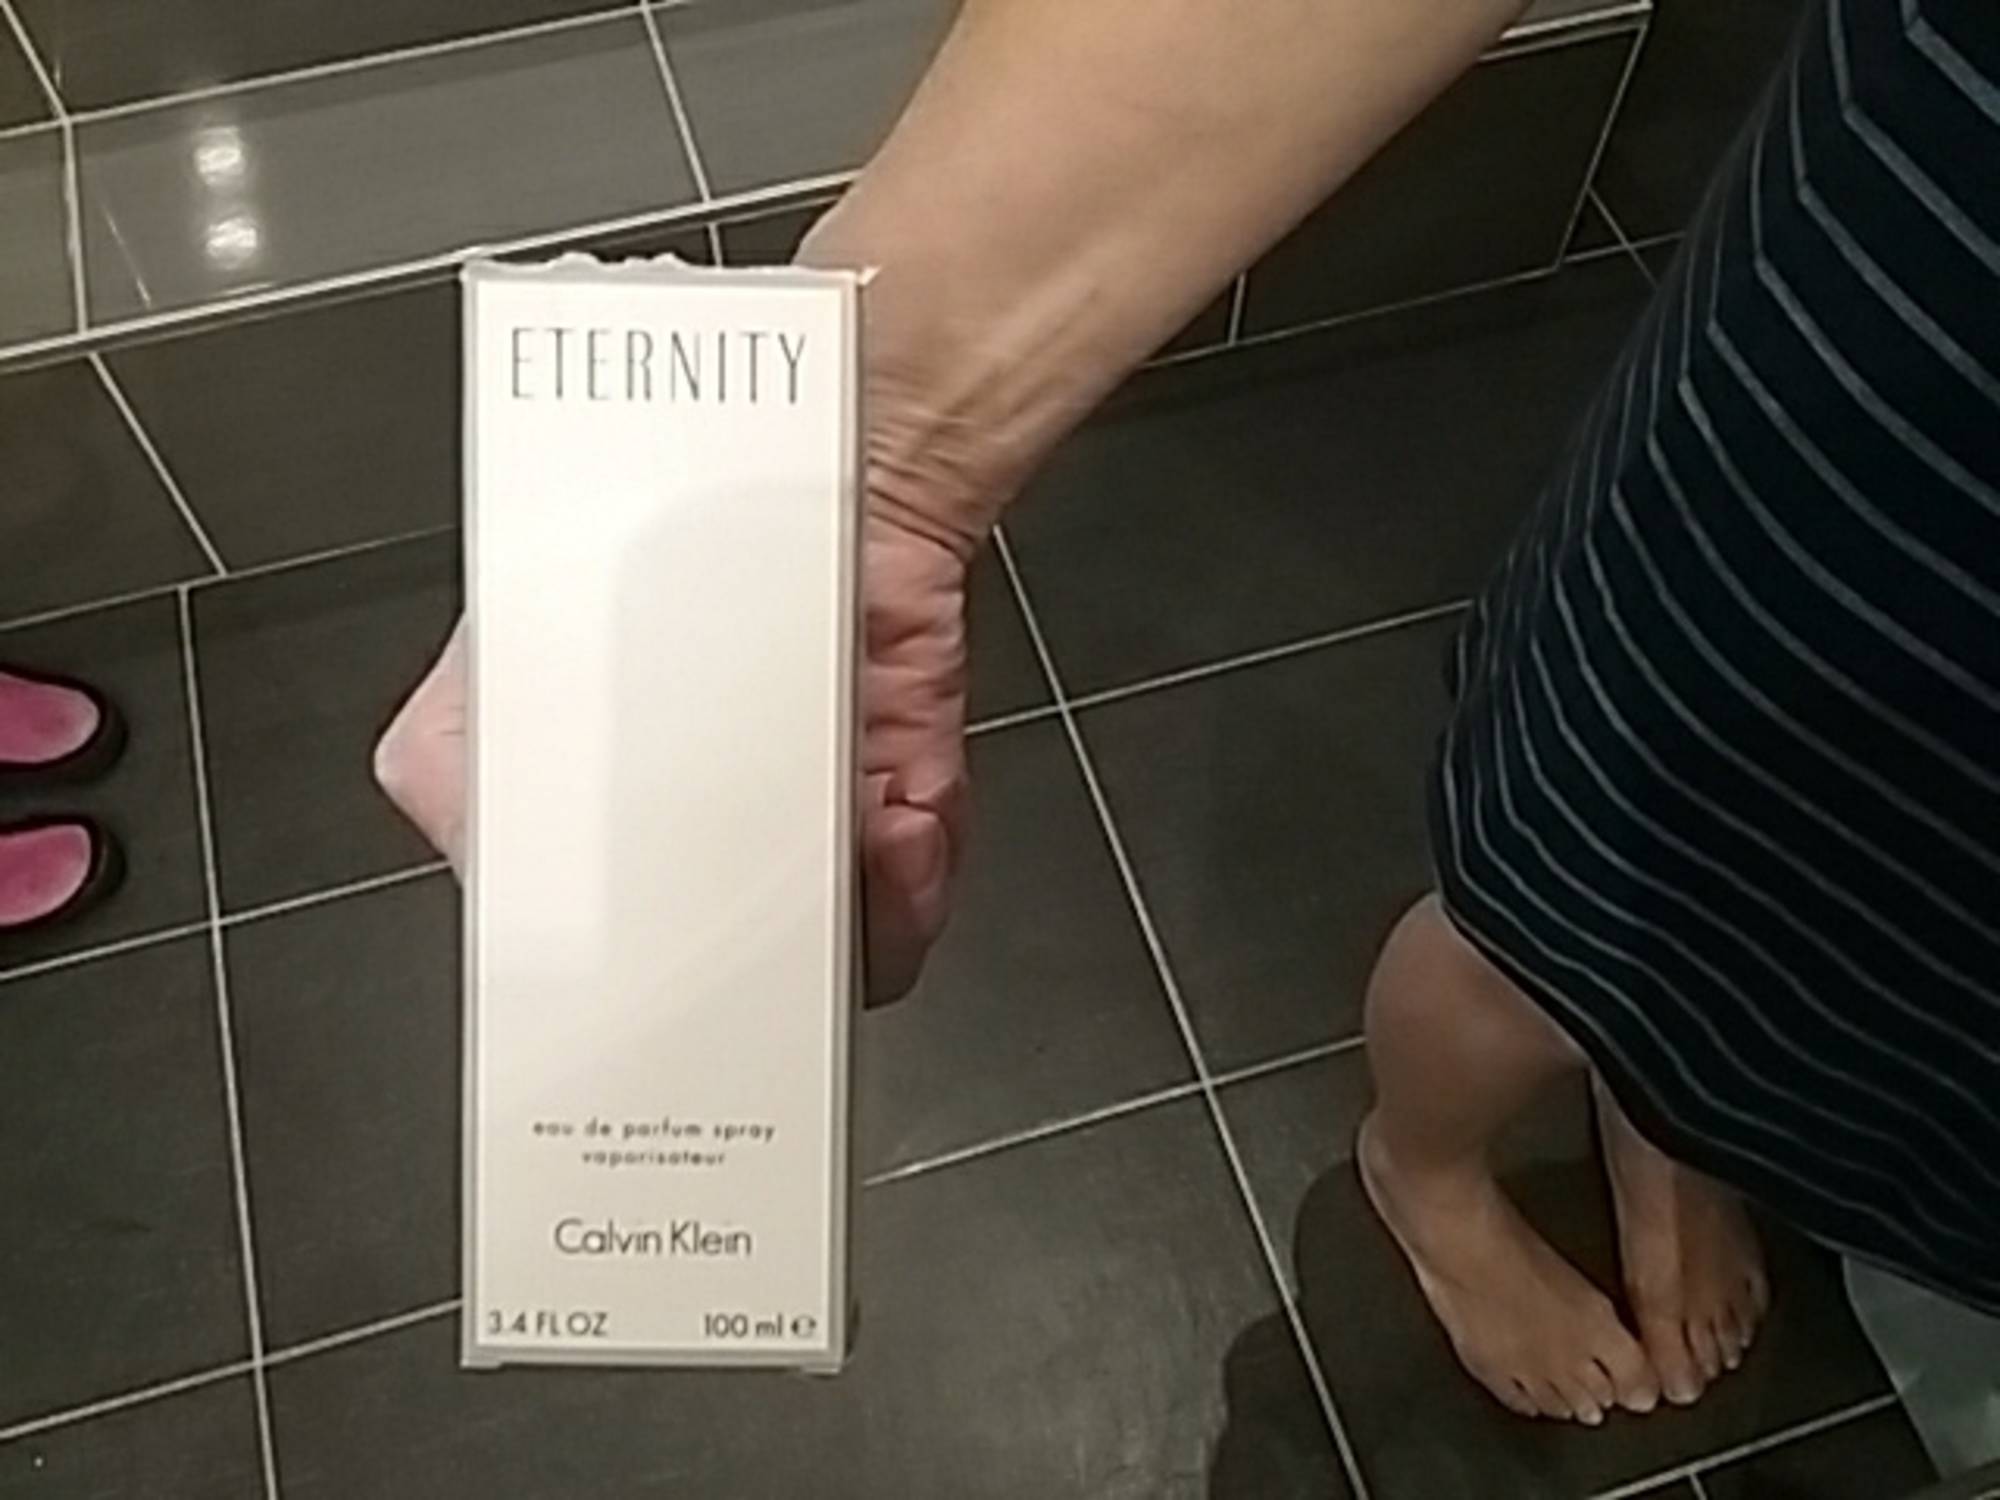 CALVIN KLEIN - Eternity - Eau de parfum spray